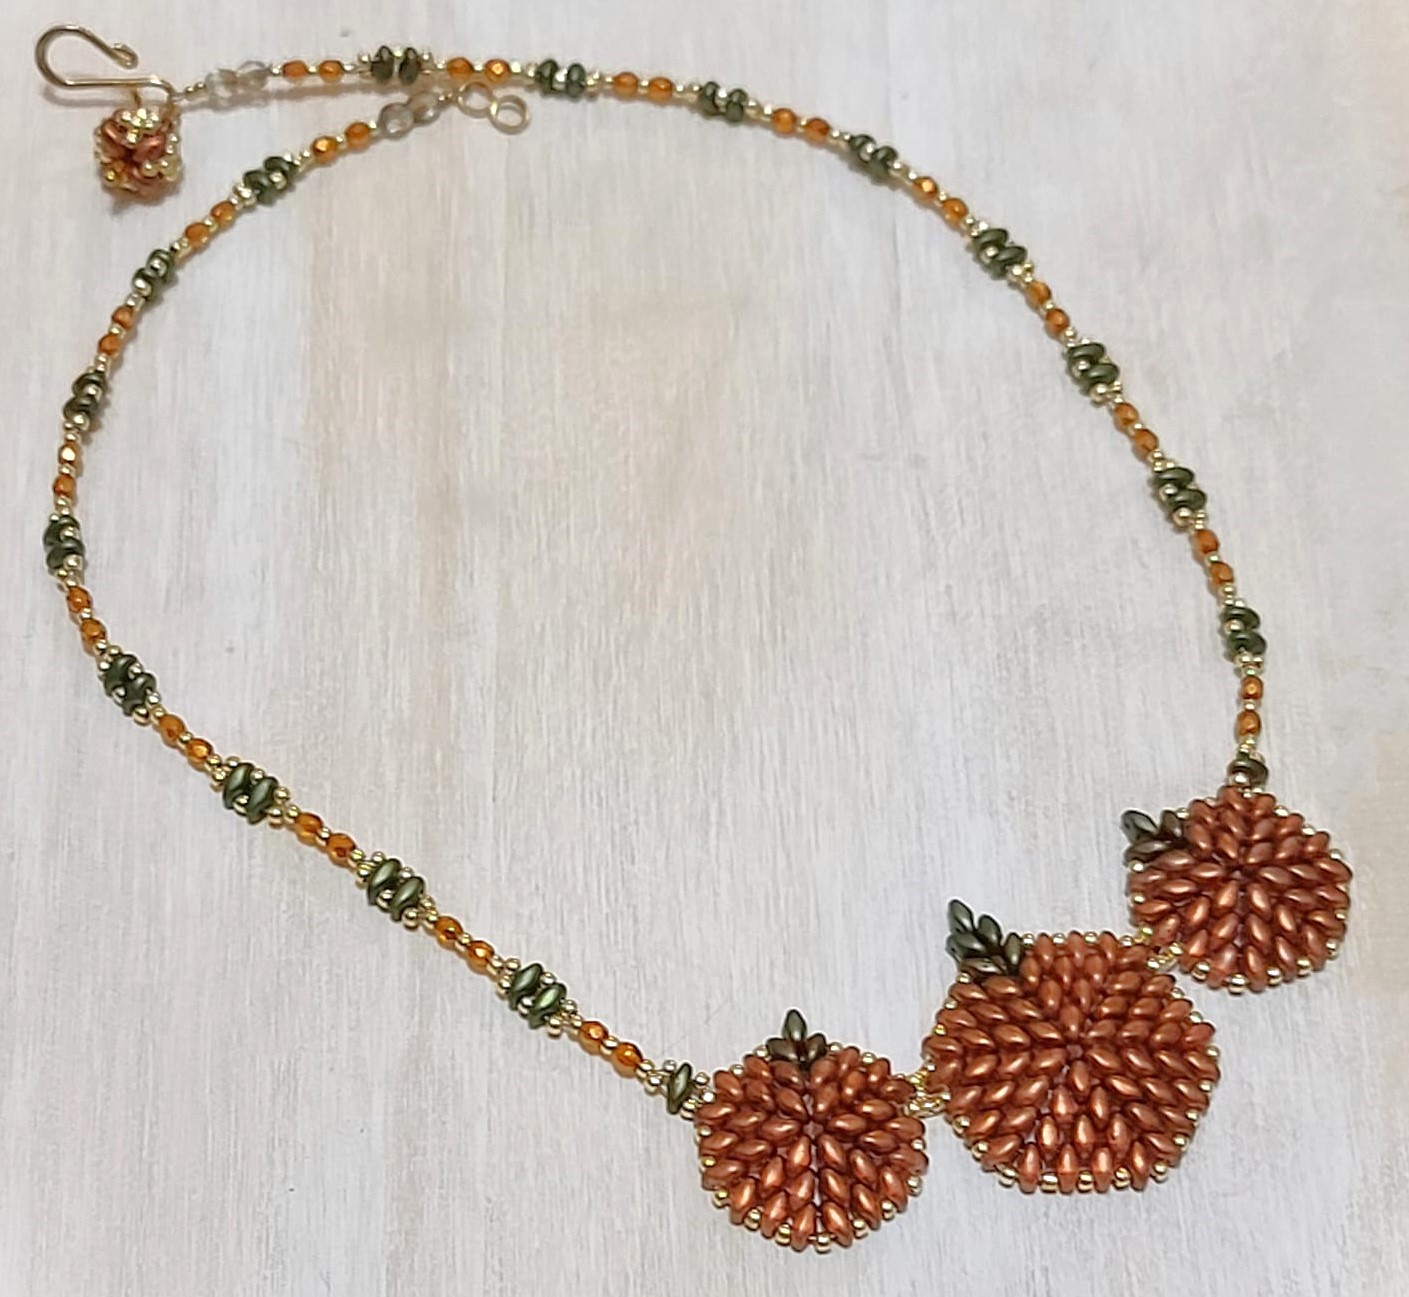 Pumpkin glass necklace, handcrafted, miyuki beads & crystals